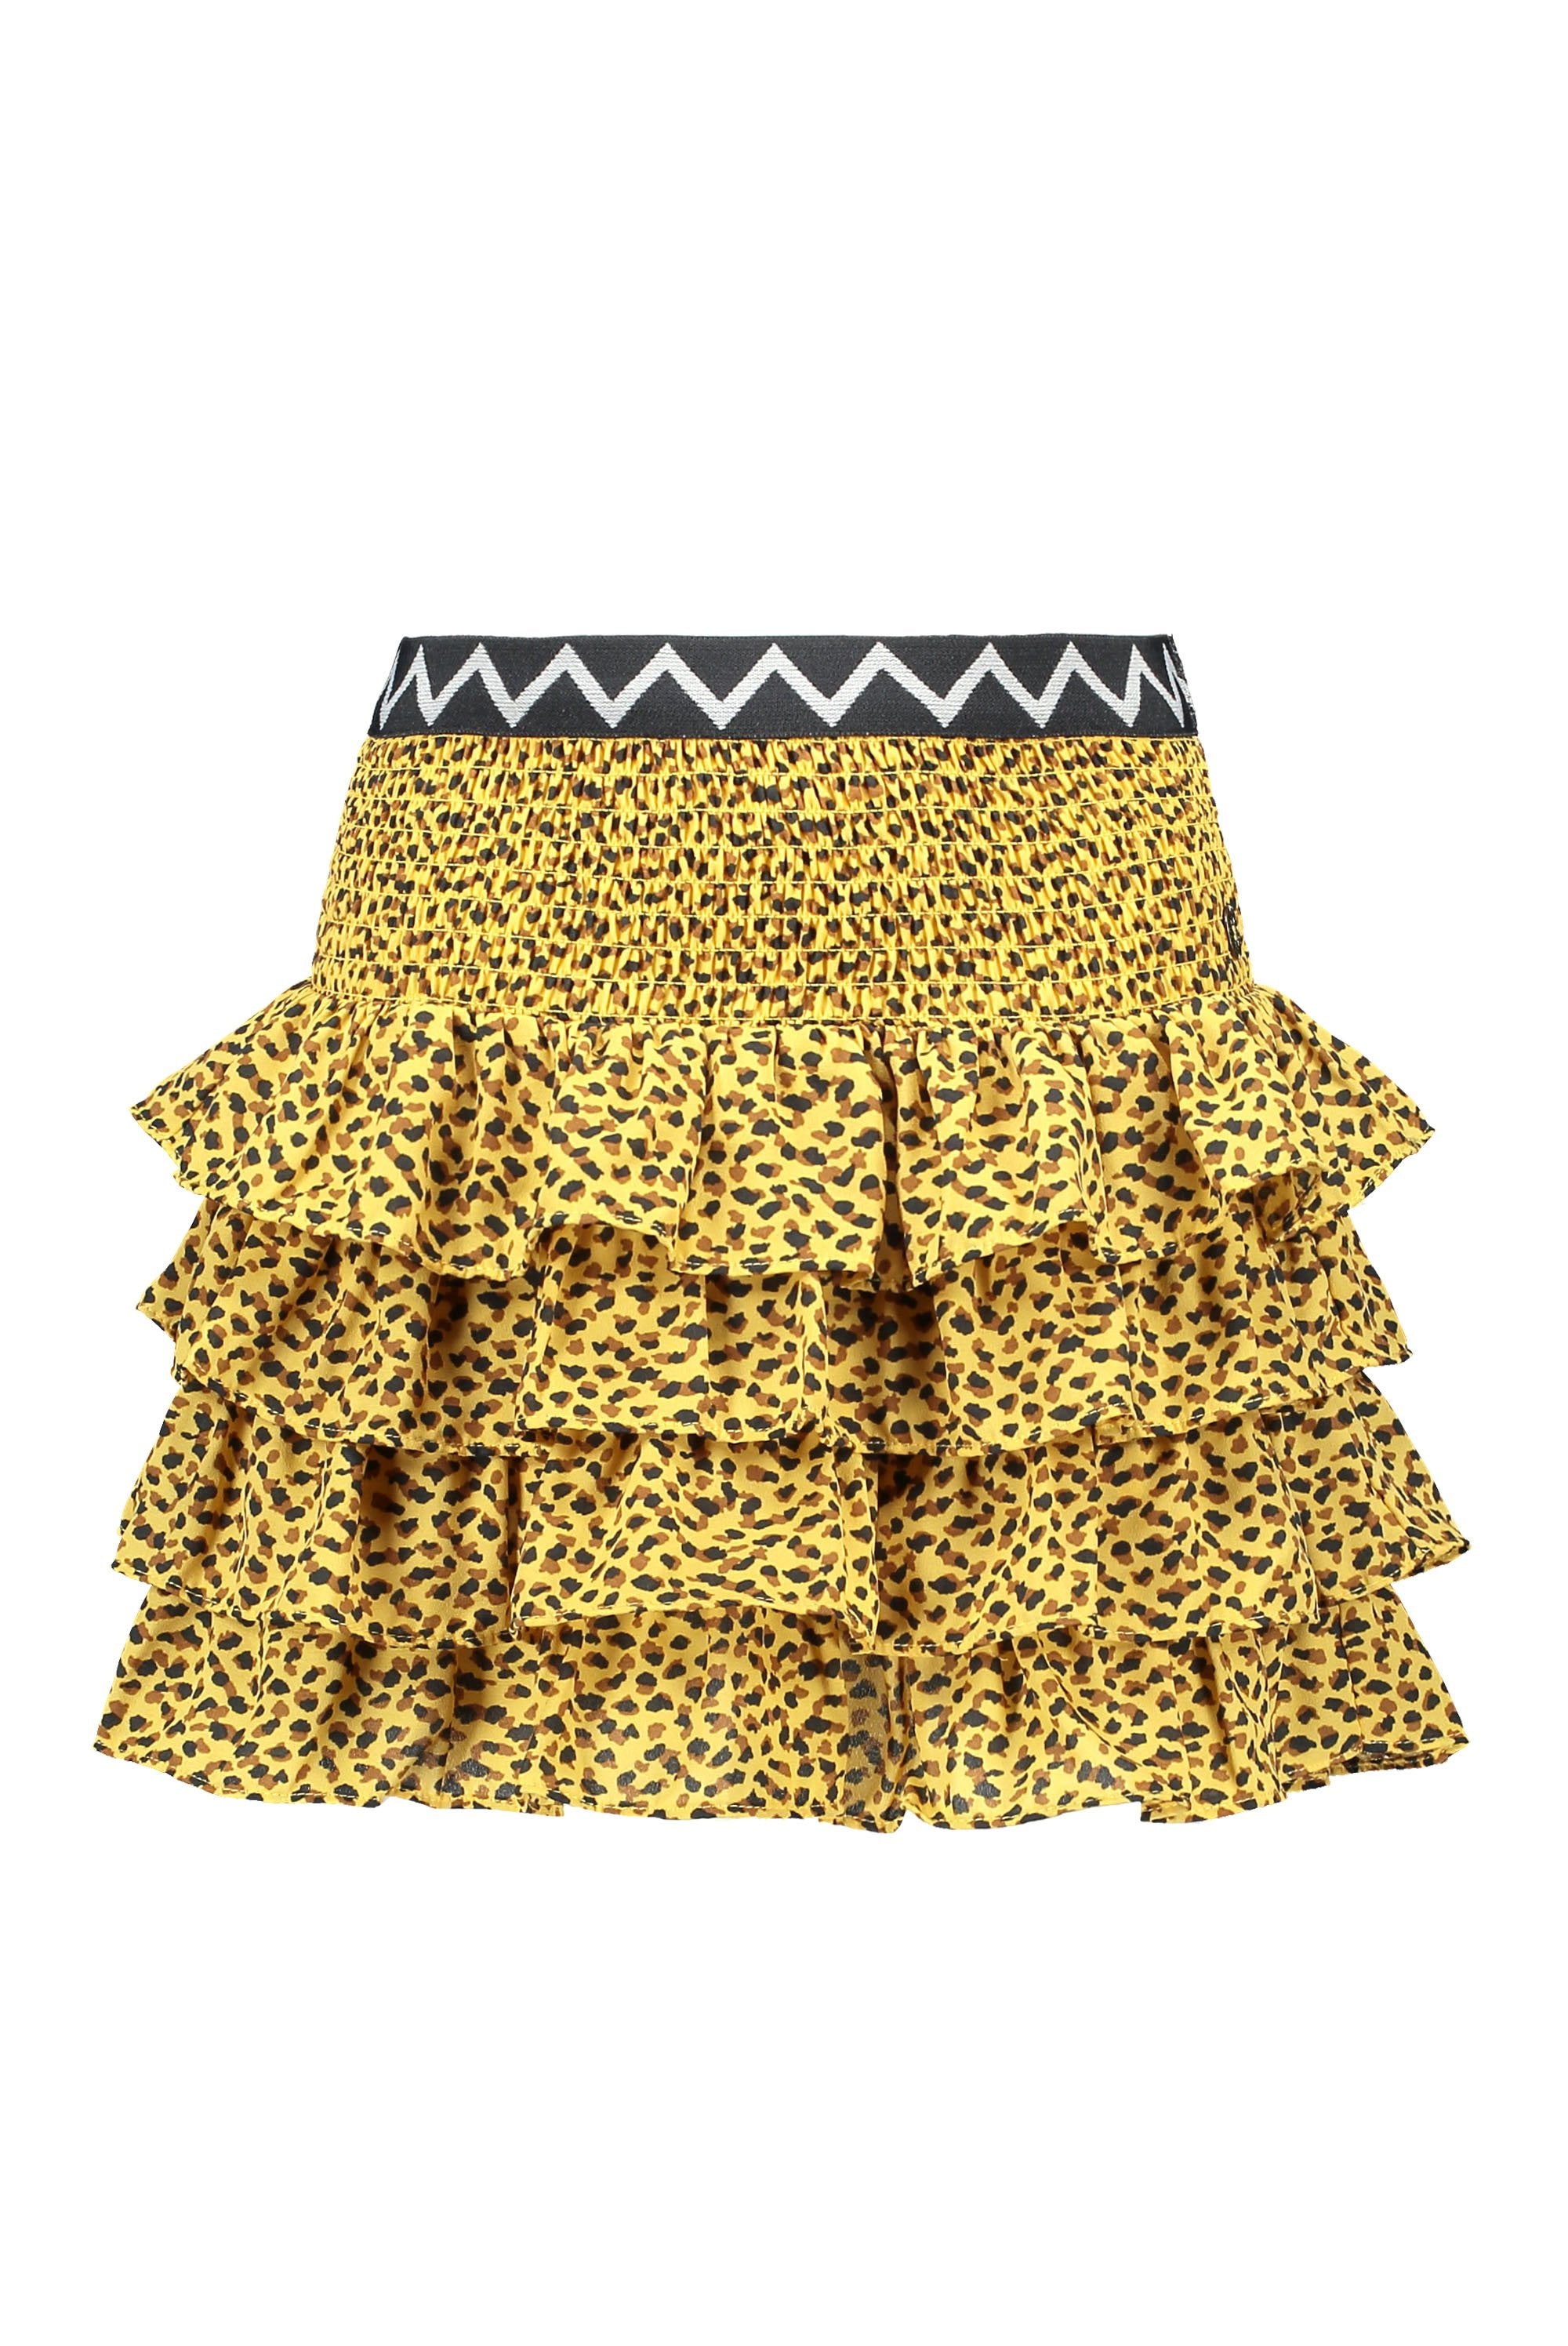 Meisjes Flo girls AO woven smock ruffle skirt van Like Flo in de kleur Panther in maat 152.